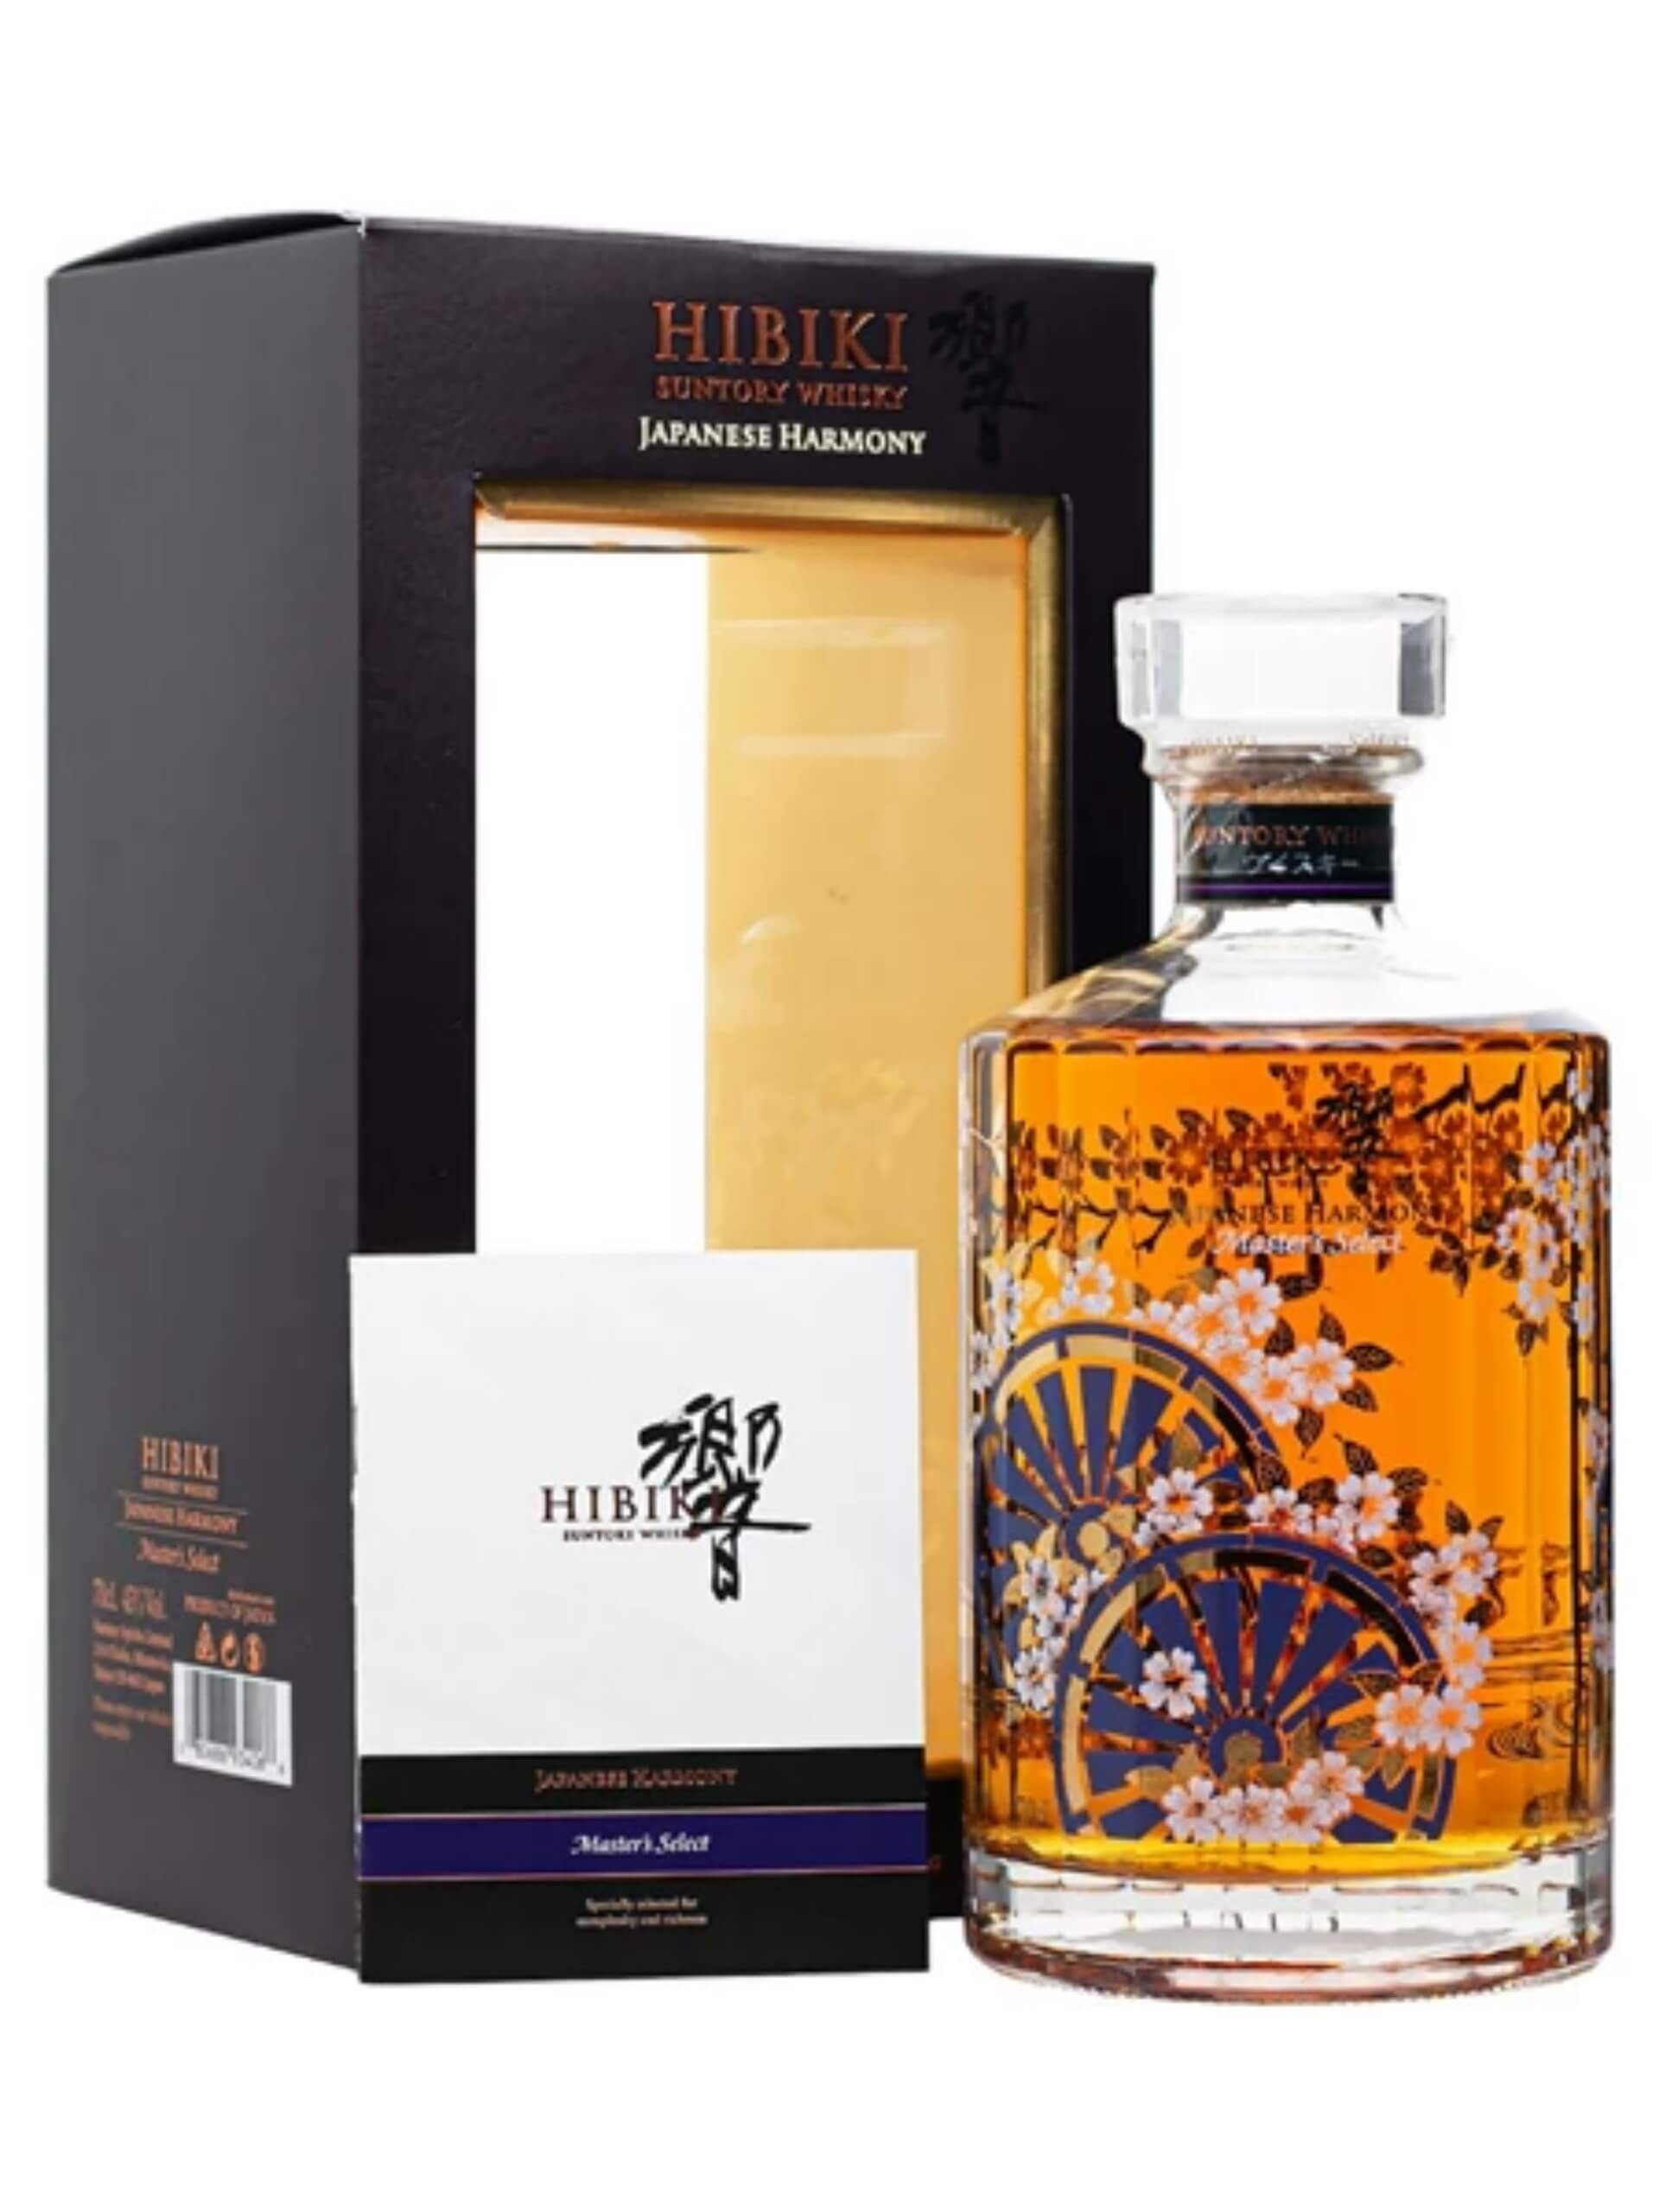 Whisky Hibiki Harmony Master Select Limited Edition